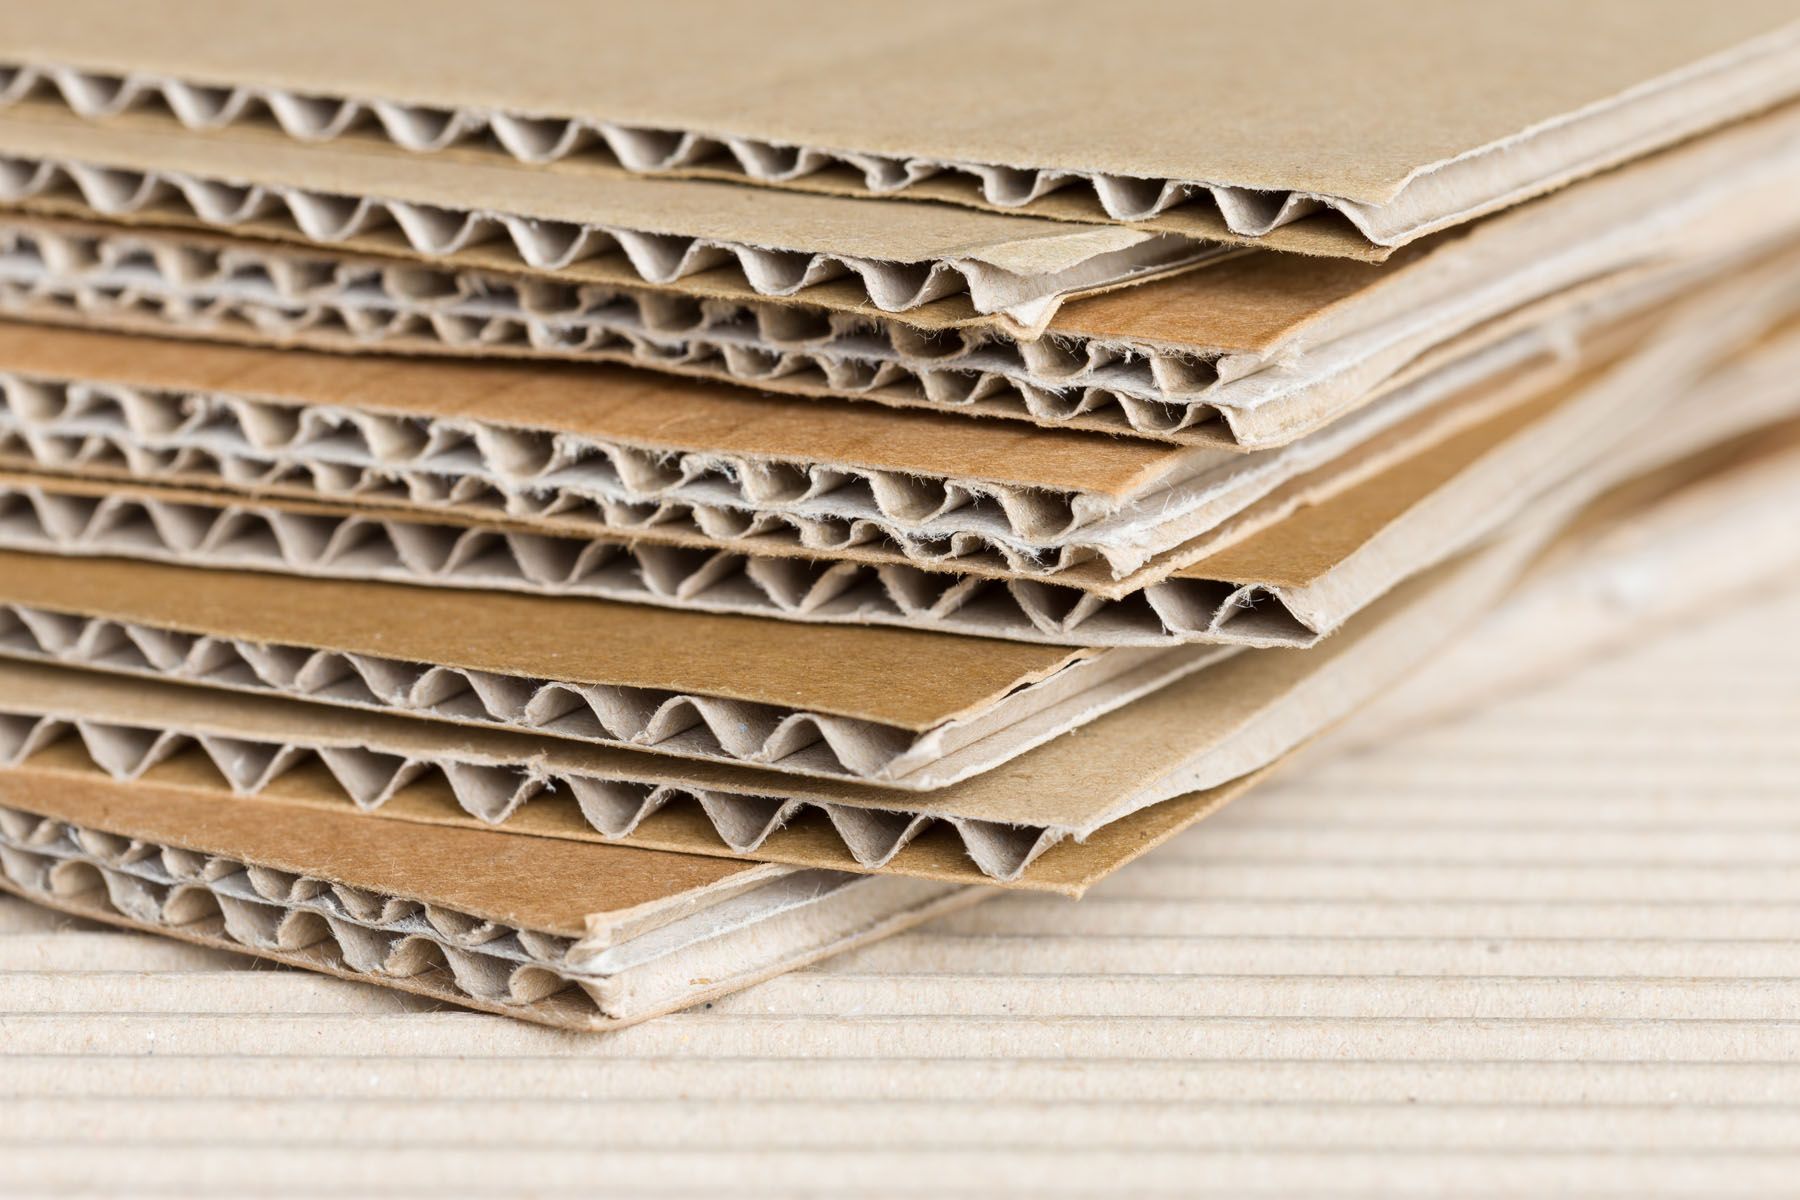 Cartón ondulado, cartón compacto y papel. Troquelado rotativo en diferentes soportes.